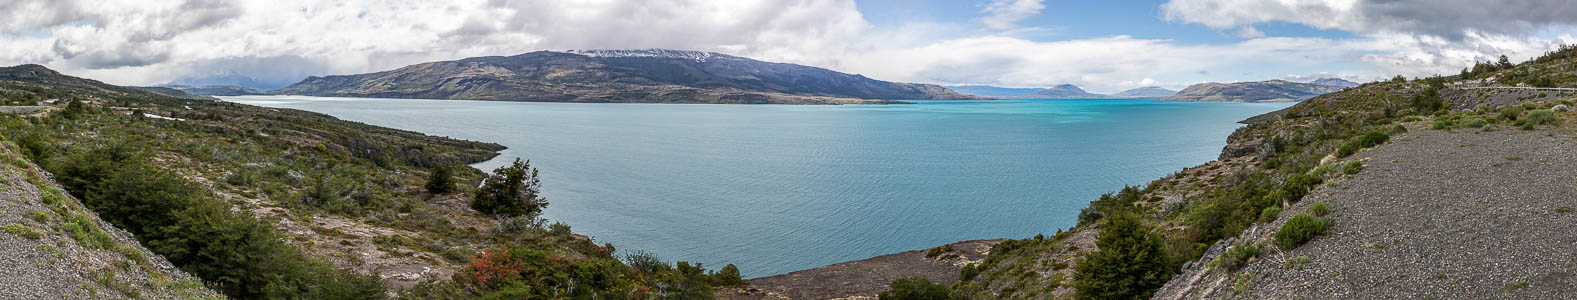 Reserva de Biósfera Torres del Paine: Lago del Toro Provincia de Última Esperanza